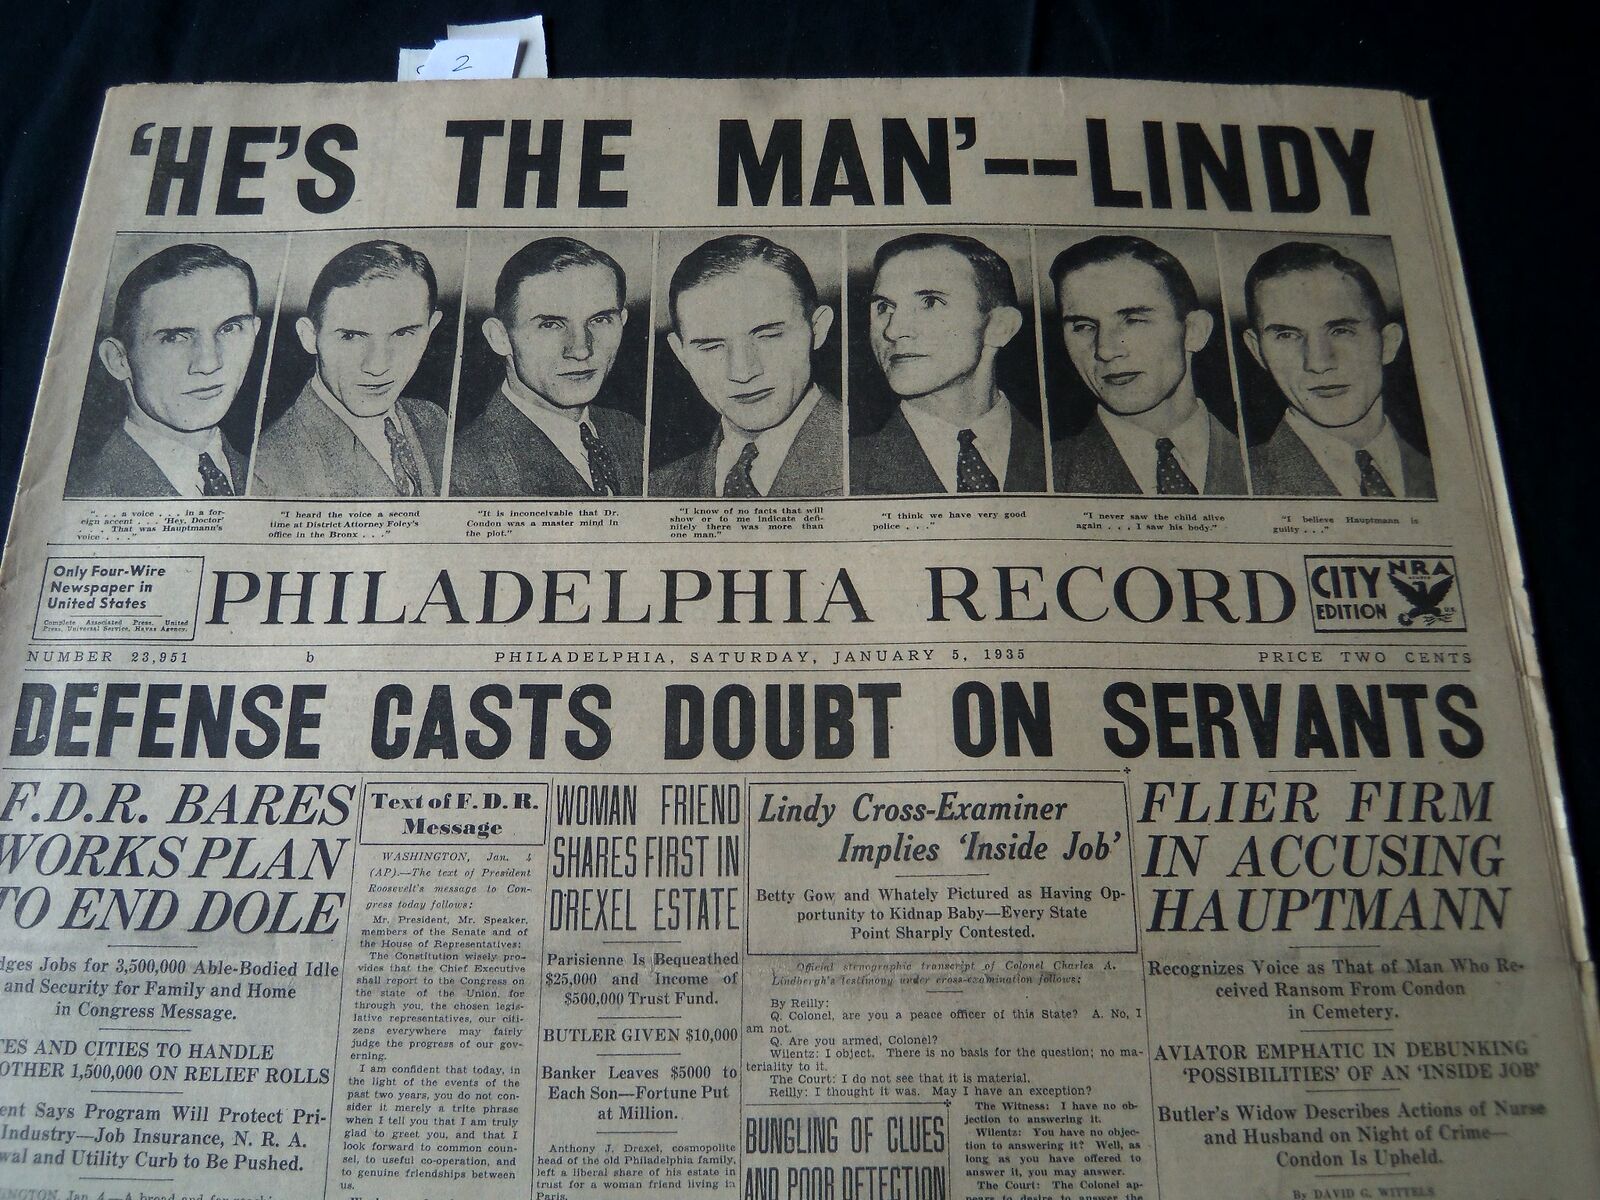 1935 JANUARY 5 PHILADELPHIA RECORD NEWSPAPER - HE'S THE MAN LINDY - NT 7252